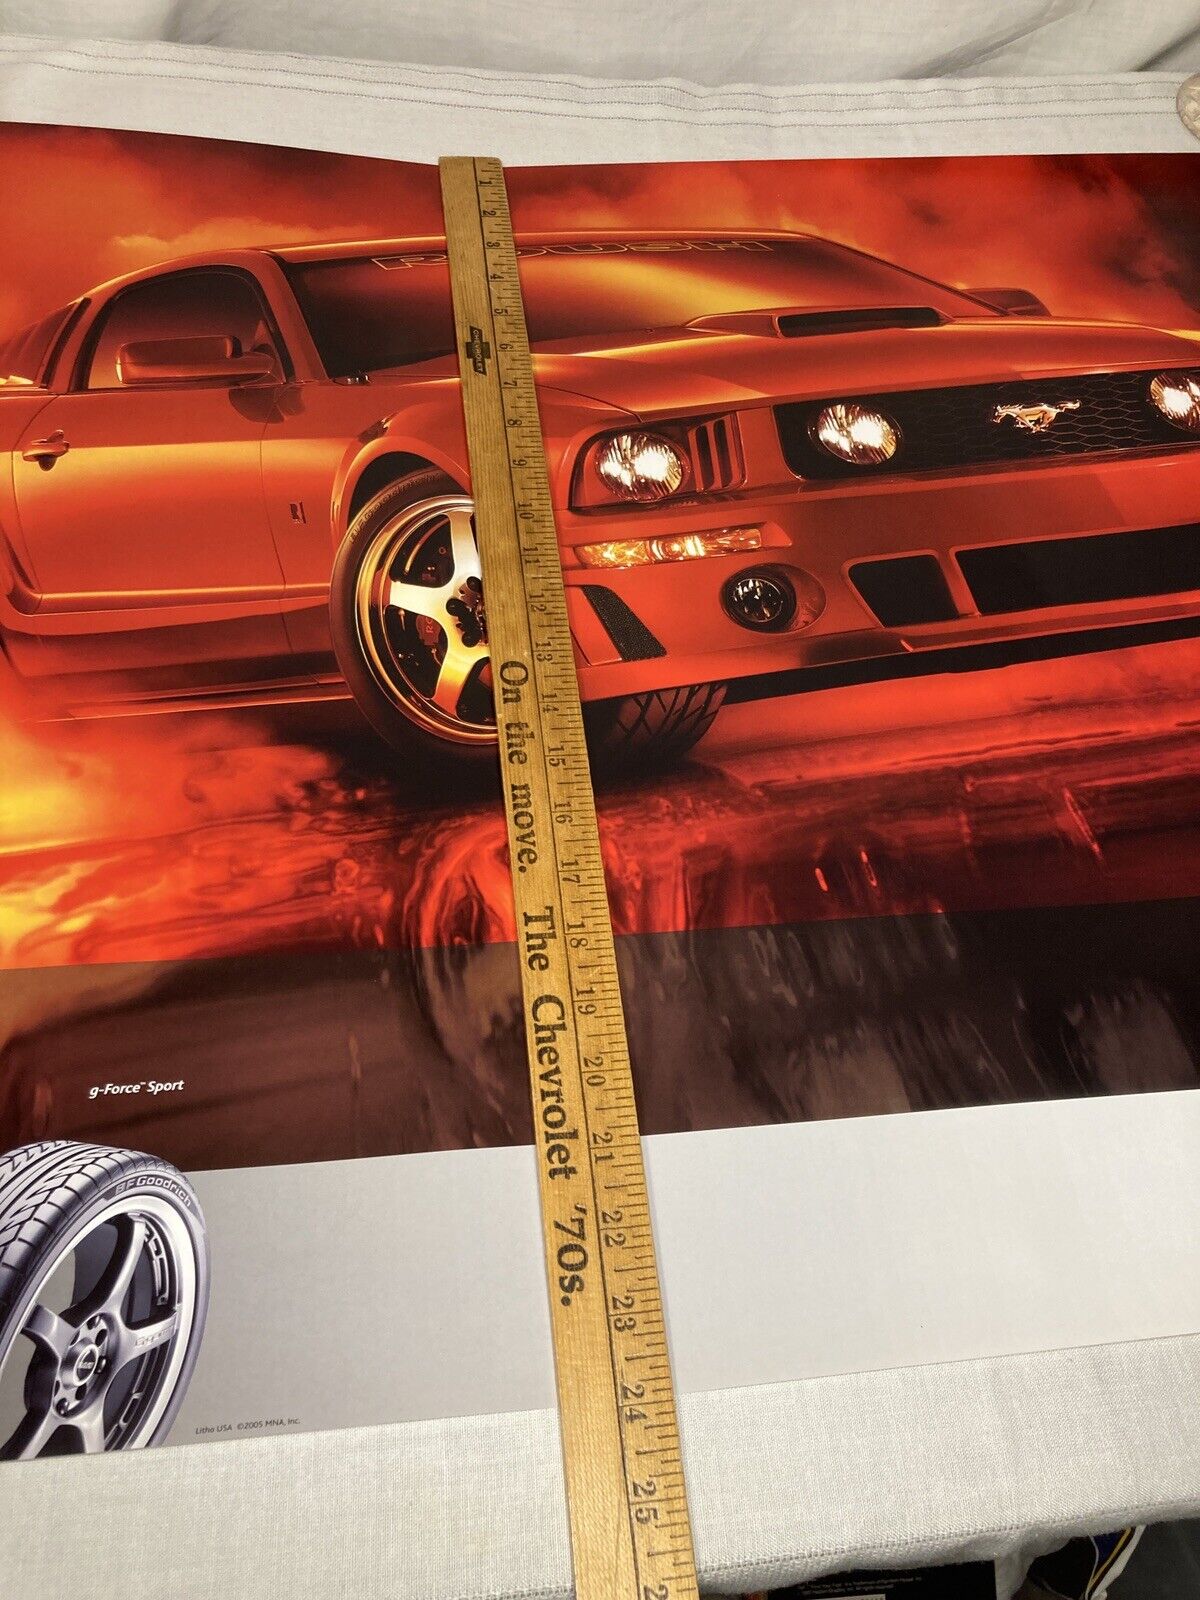 Lot of (2) 2005 Roush Mustang, BF Goodrich Tires Posters (New, Mint)  21 x 36" B F Goodrich - фотография #6